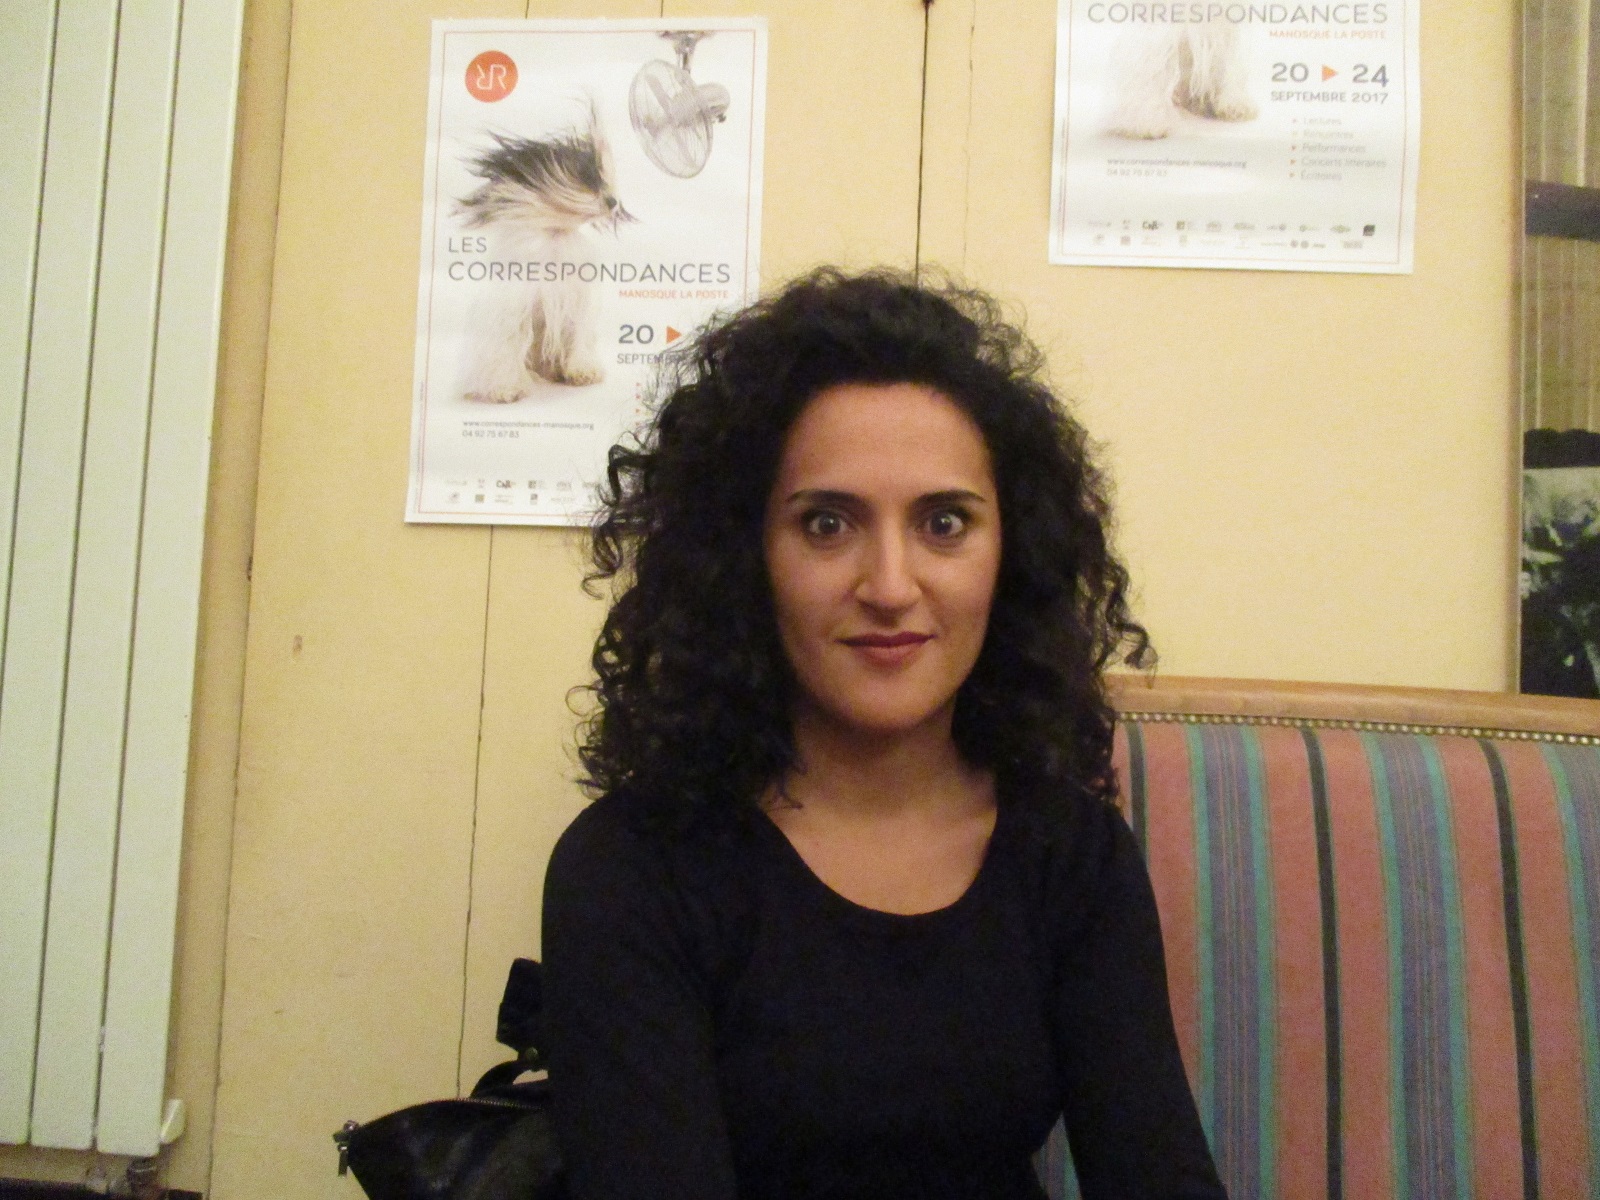 Maryam Madjidi : Comment peut-on être Persane ?